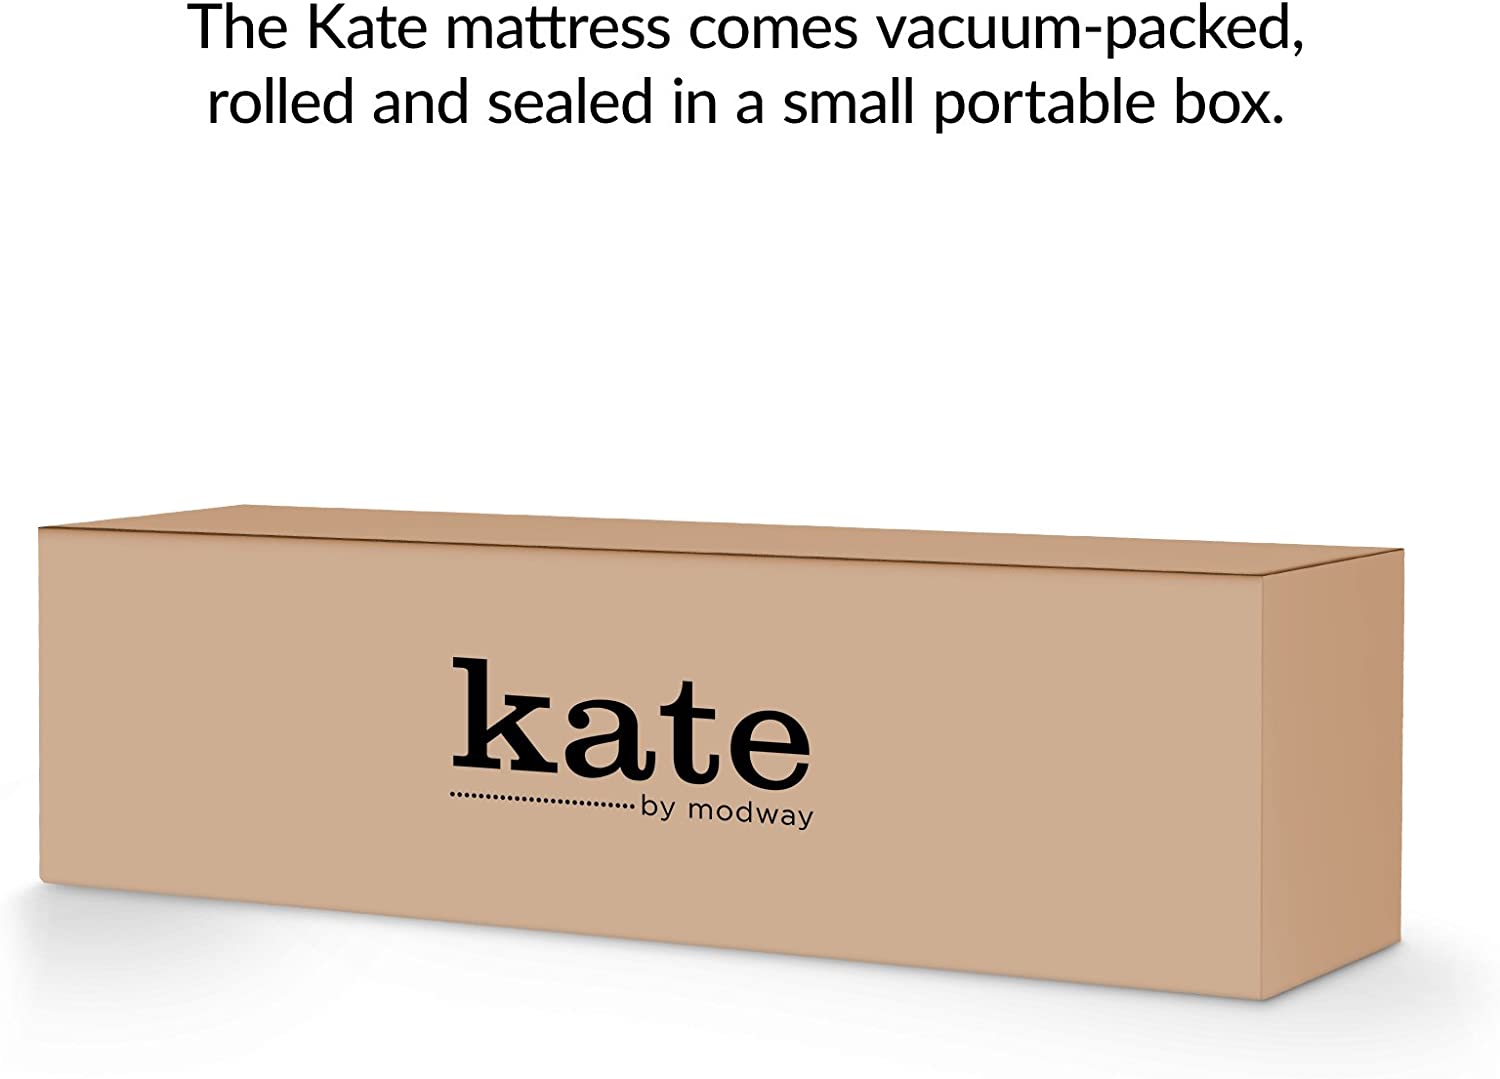 Modway Kate 8√É¬¢√¢‚Äö¬¨√Ç¬ù King Innerspring Mattress - Firm 8 Inch King Innerspring Mattress- 10-Year Warranty